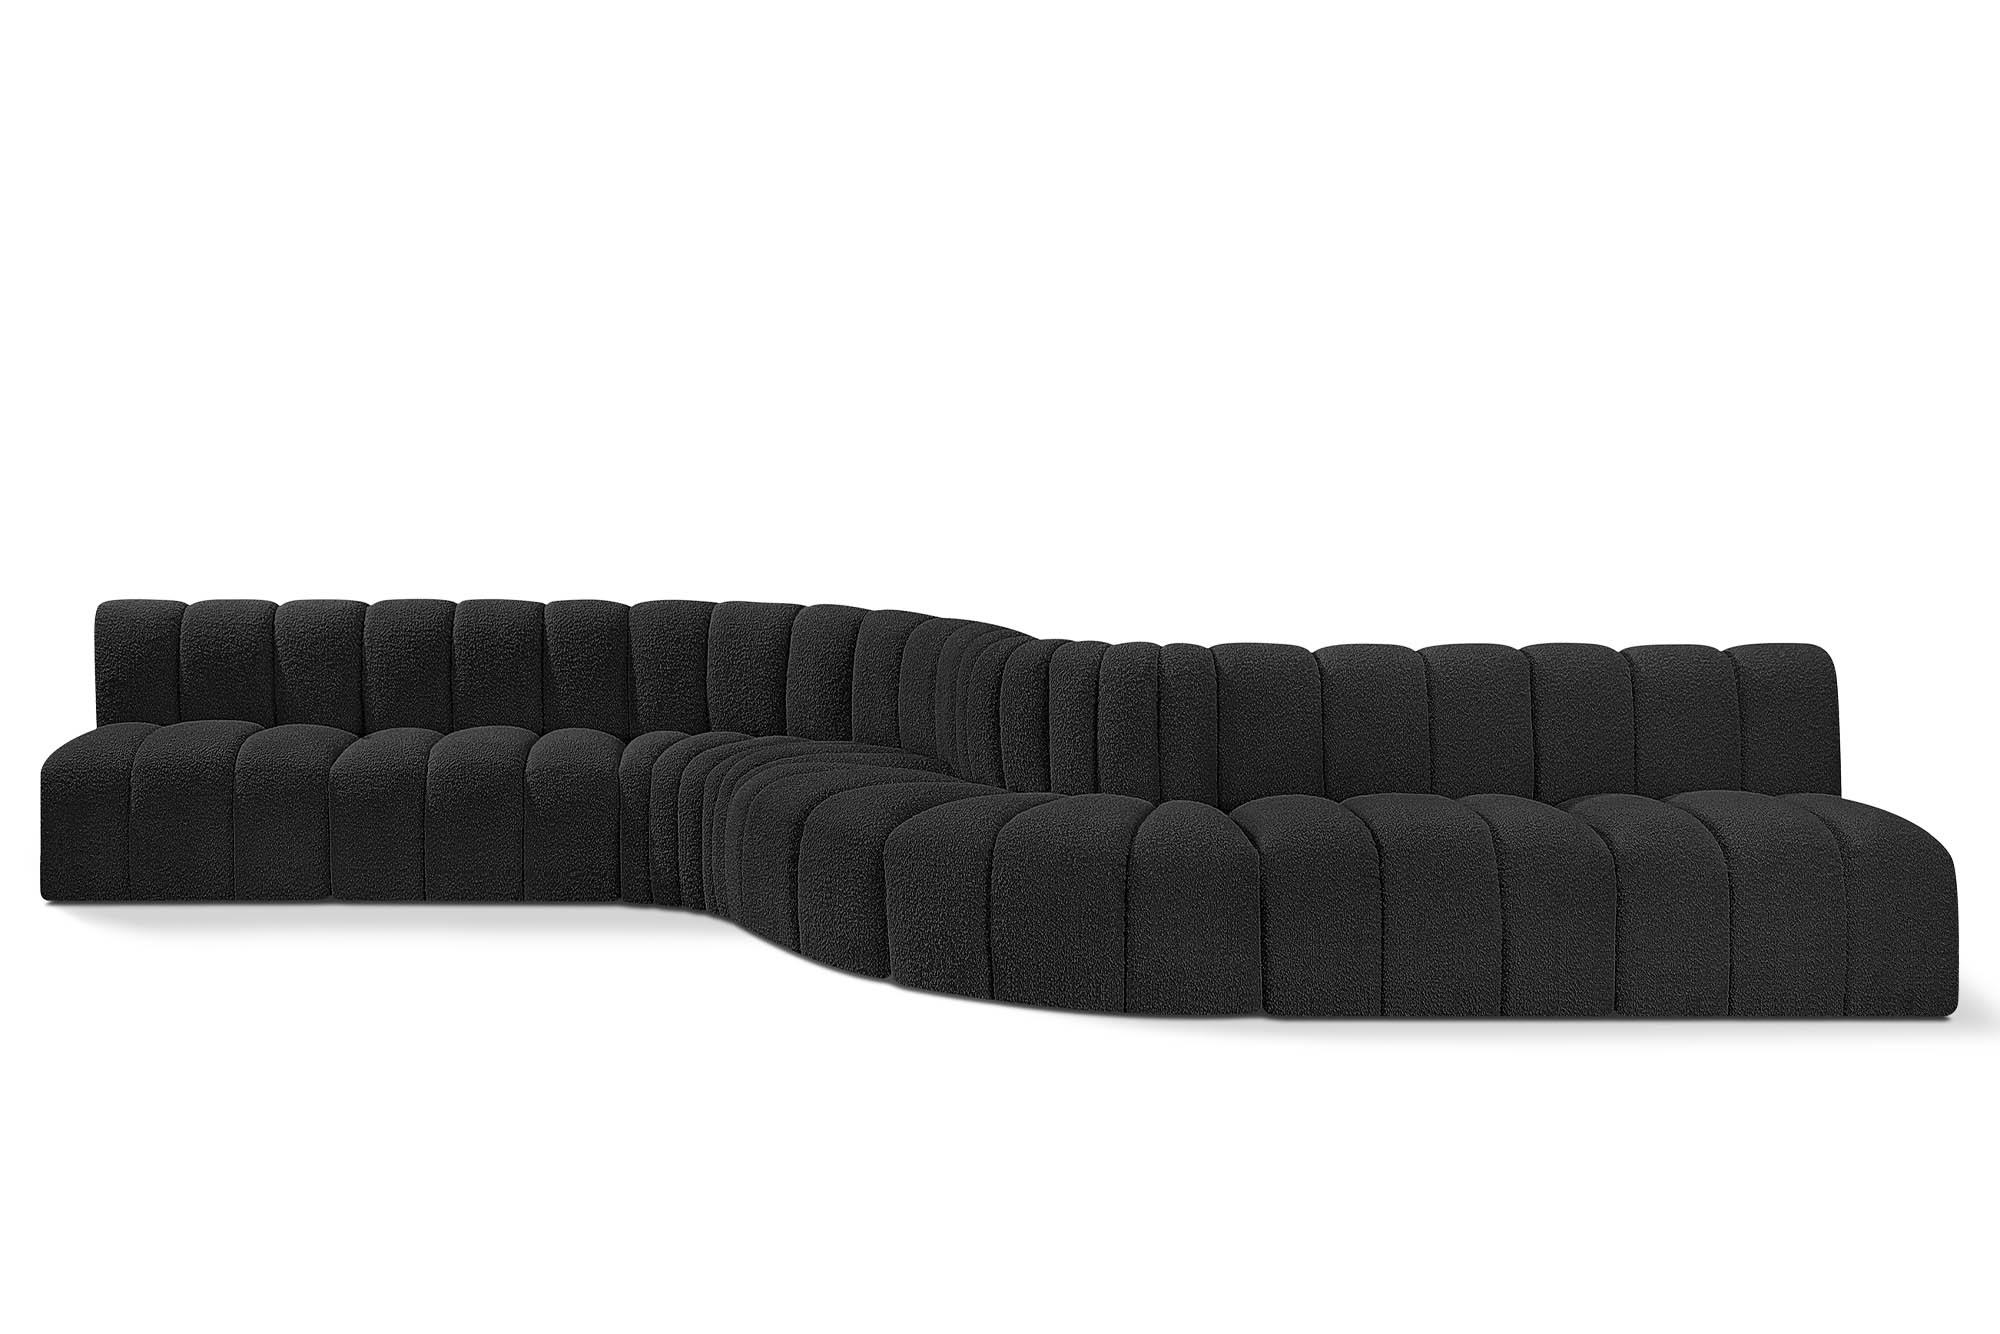 Contemporary, Modern Modular Sectional Sofa ARC 102Black-S8C 102Black-S8C in Black 